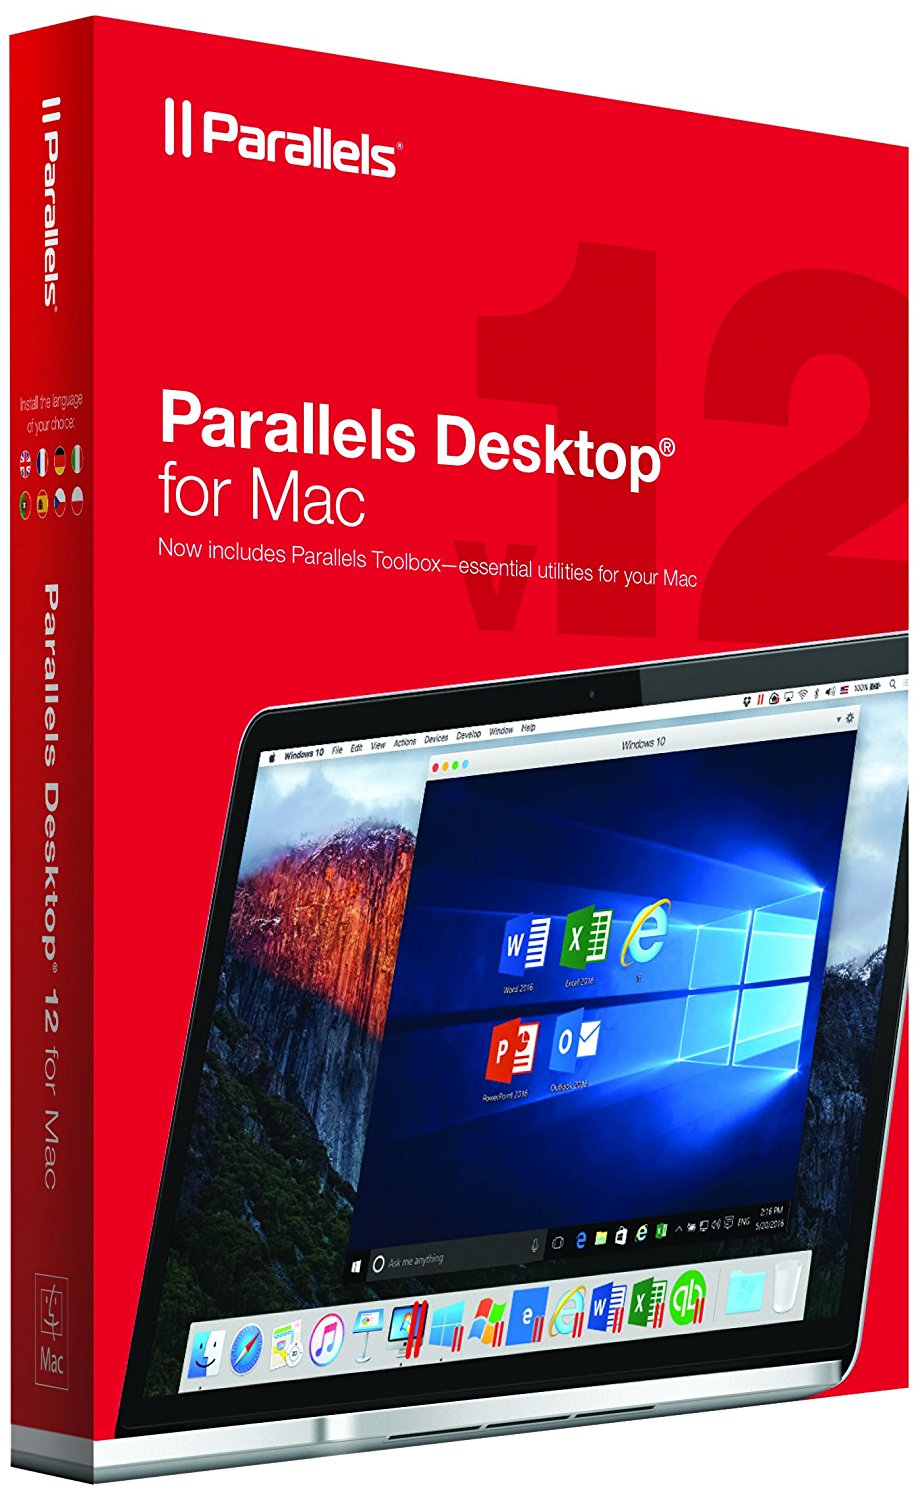 parallels desktop 12 activation key for mac